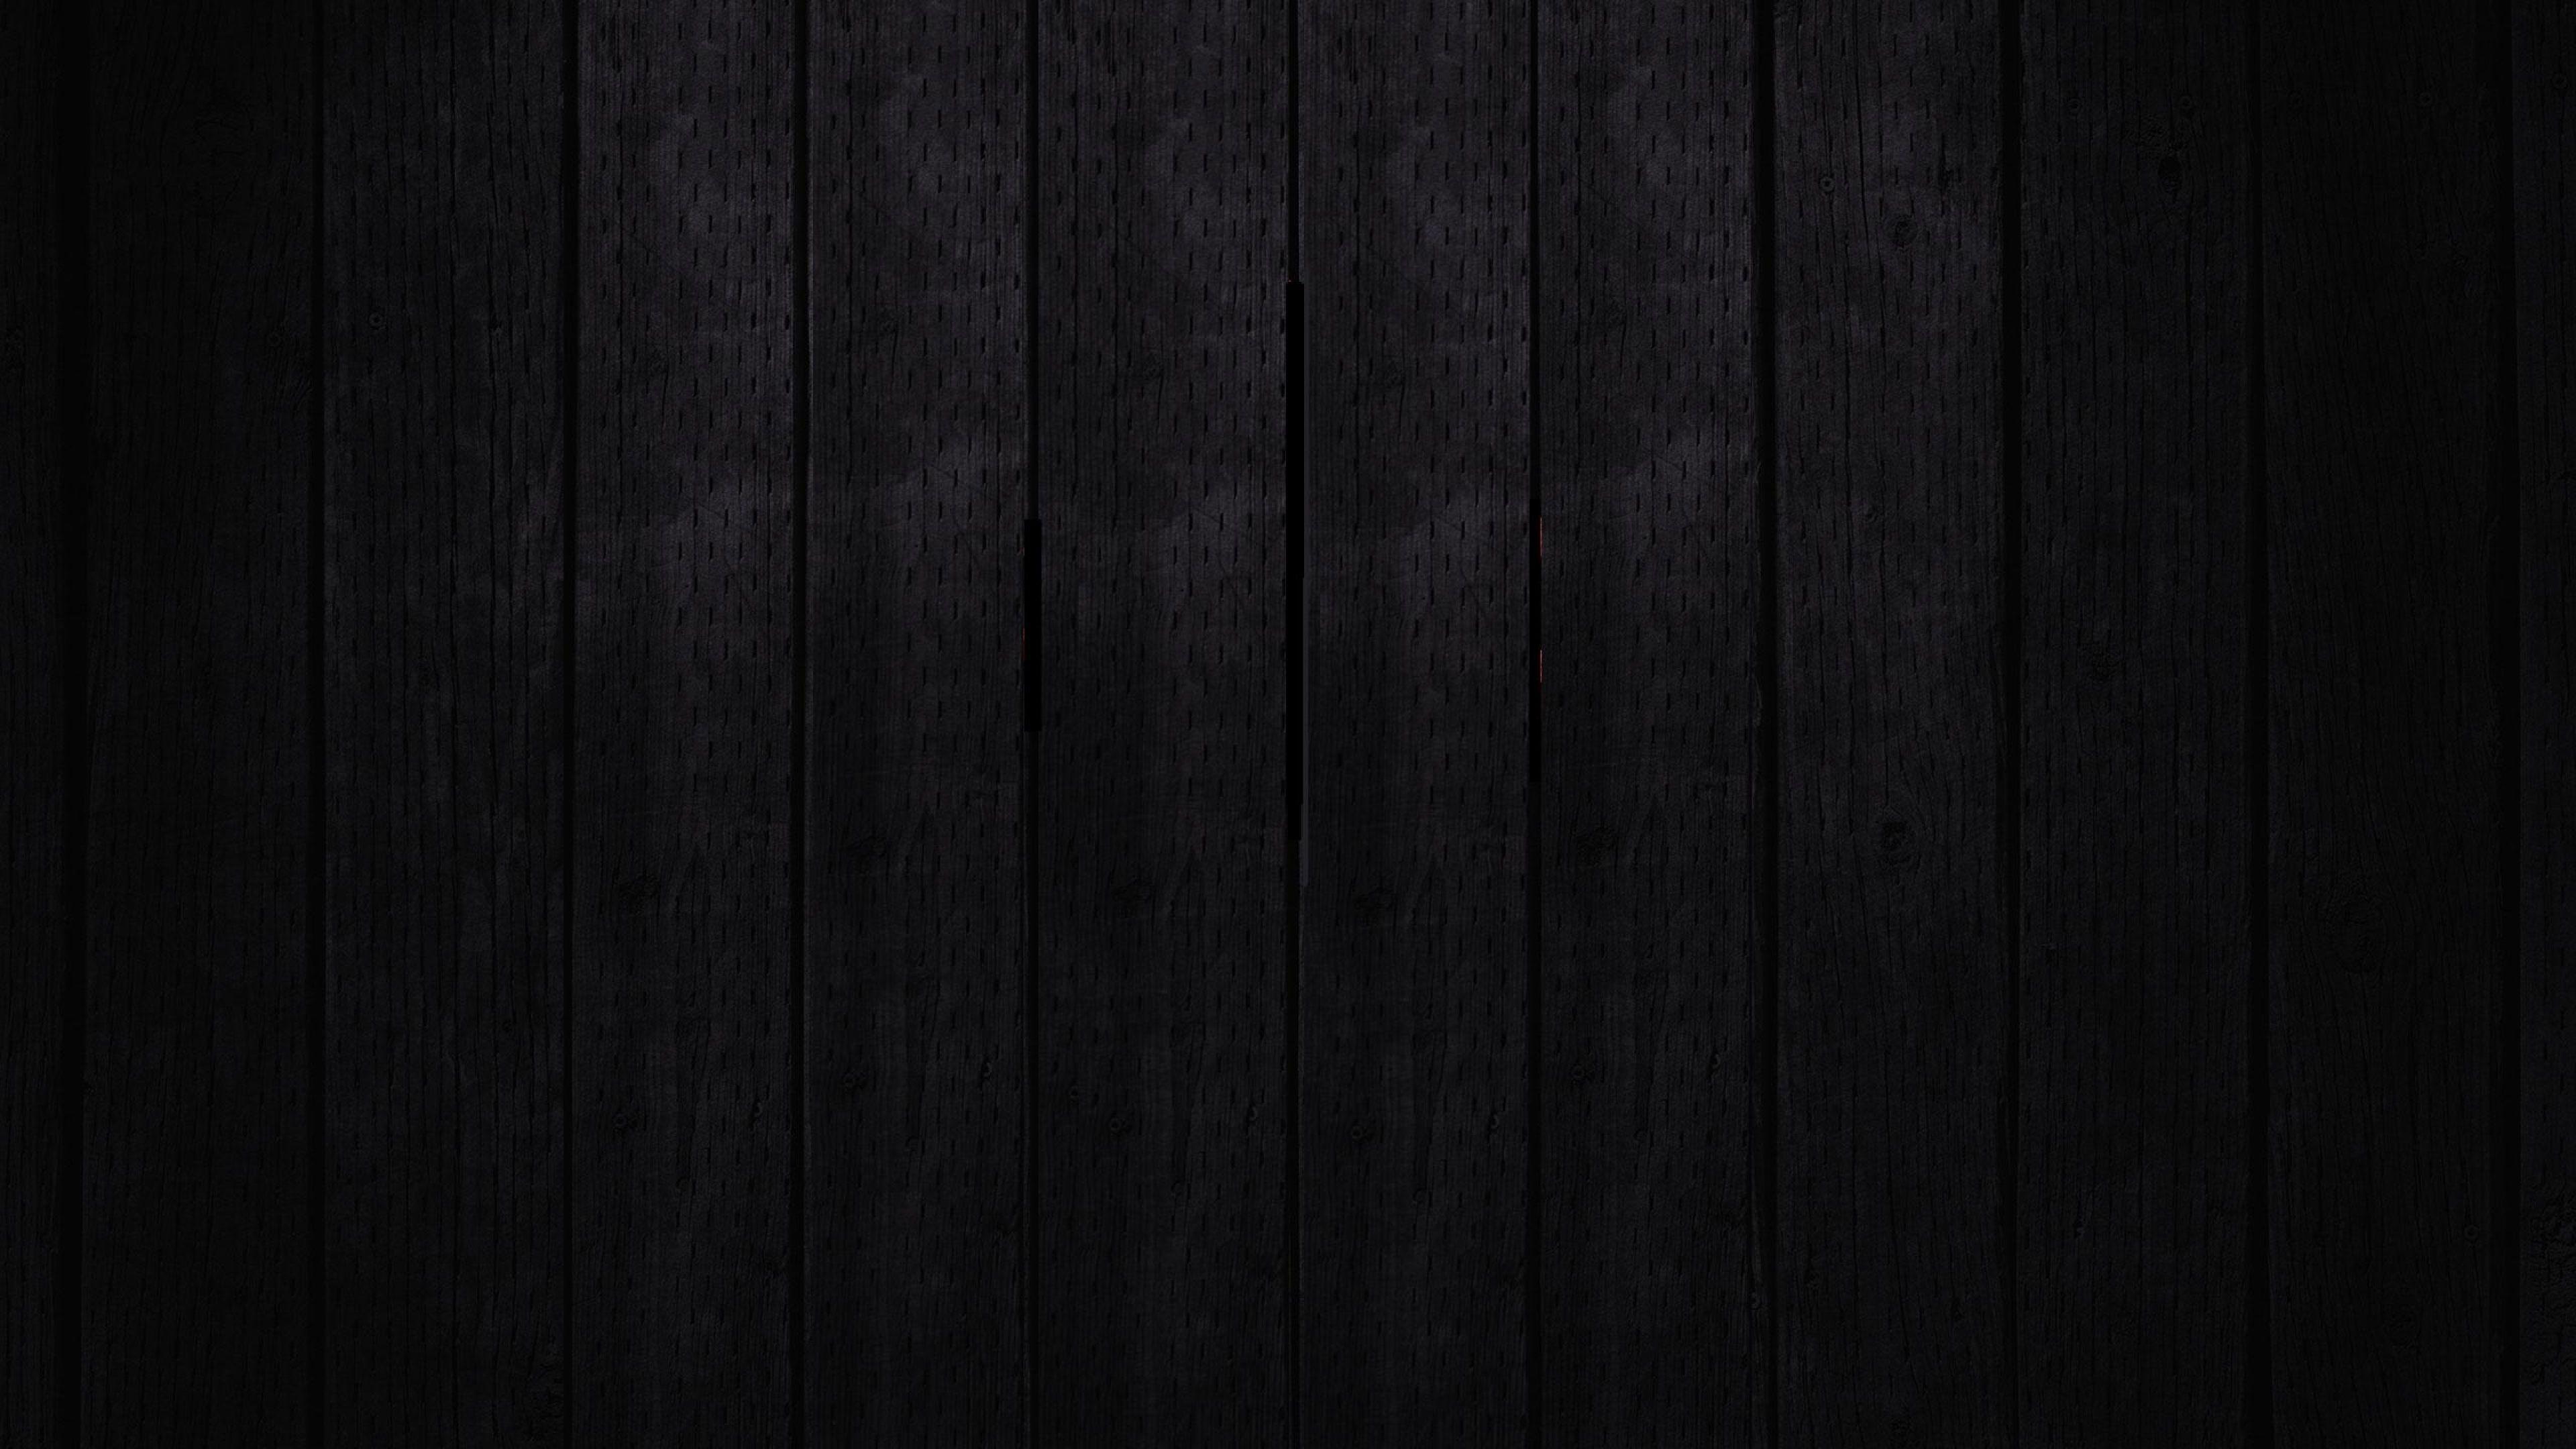 Featured image of post Dark Mode Wallpaper 4K Pc Dark wallpapers hd 4k uhd 16 9 3840x2160 sort wallpapers by